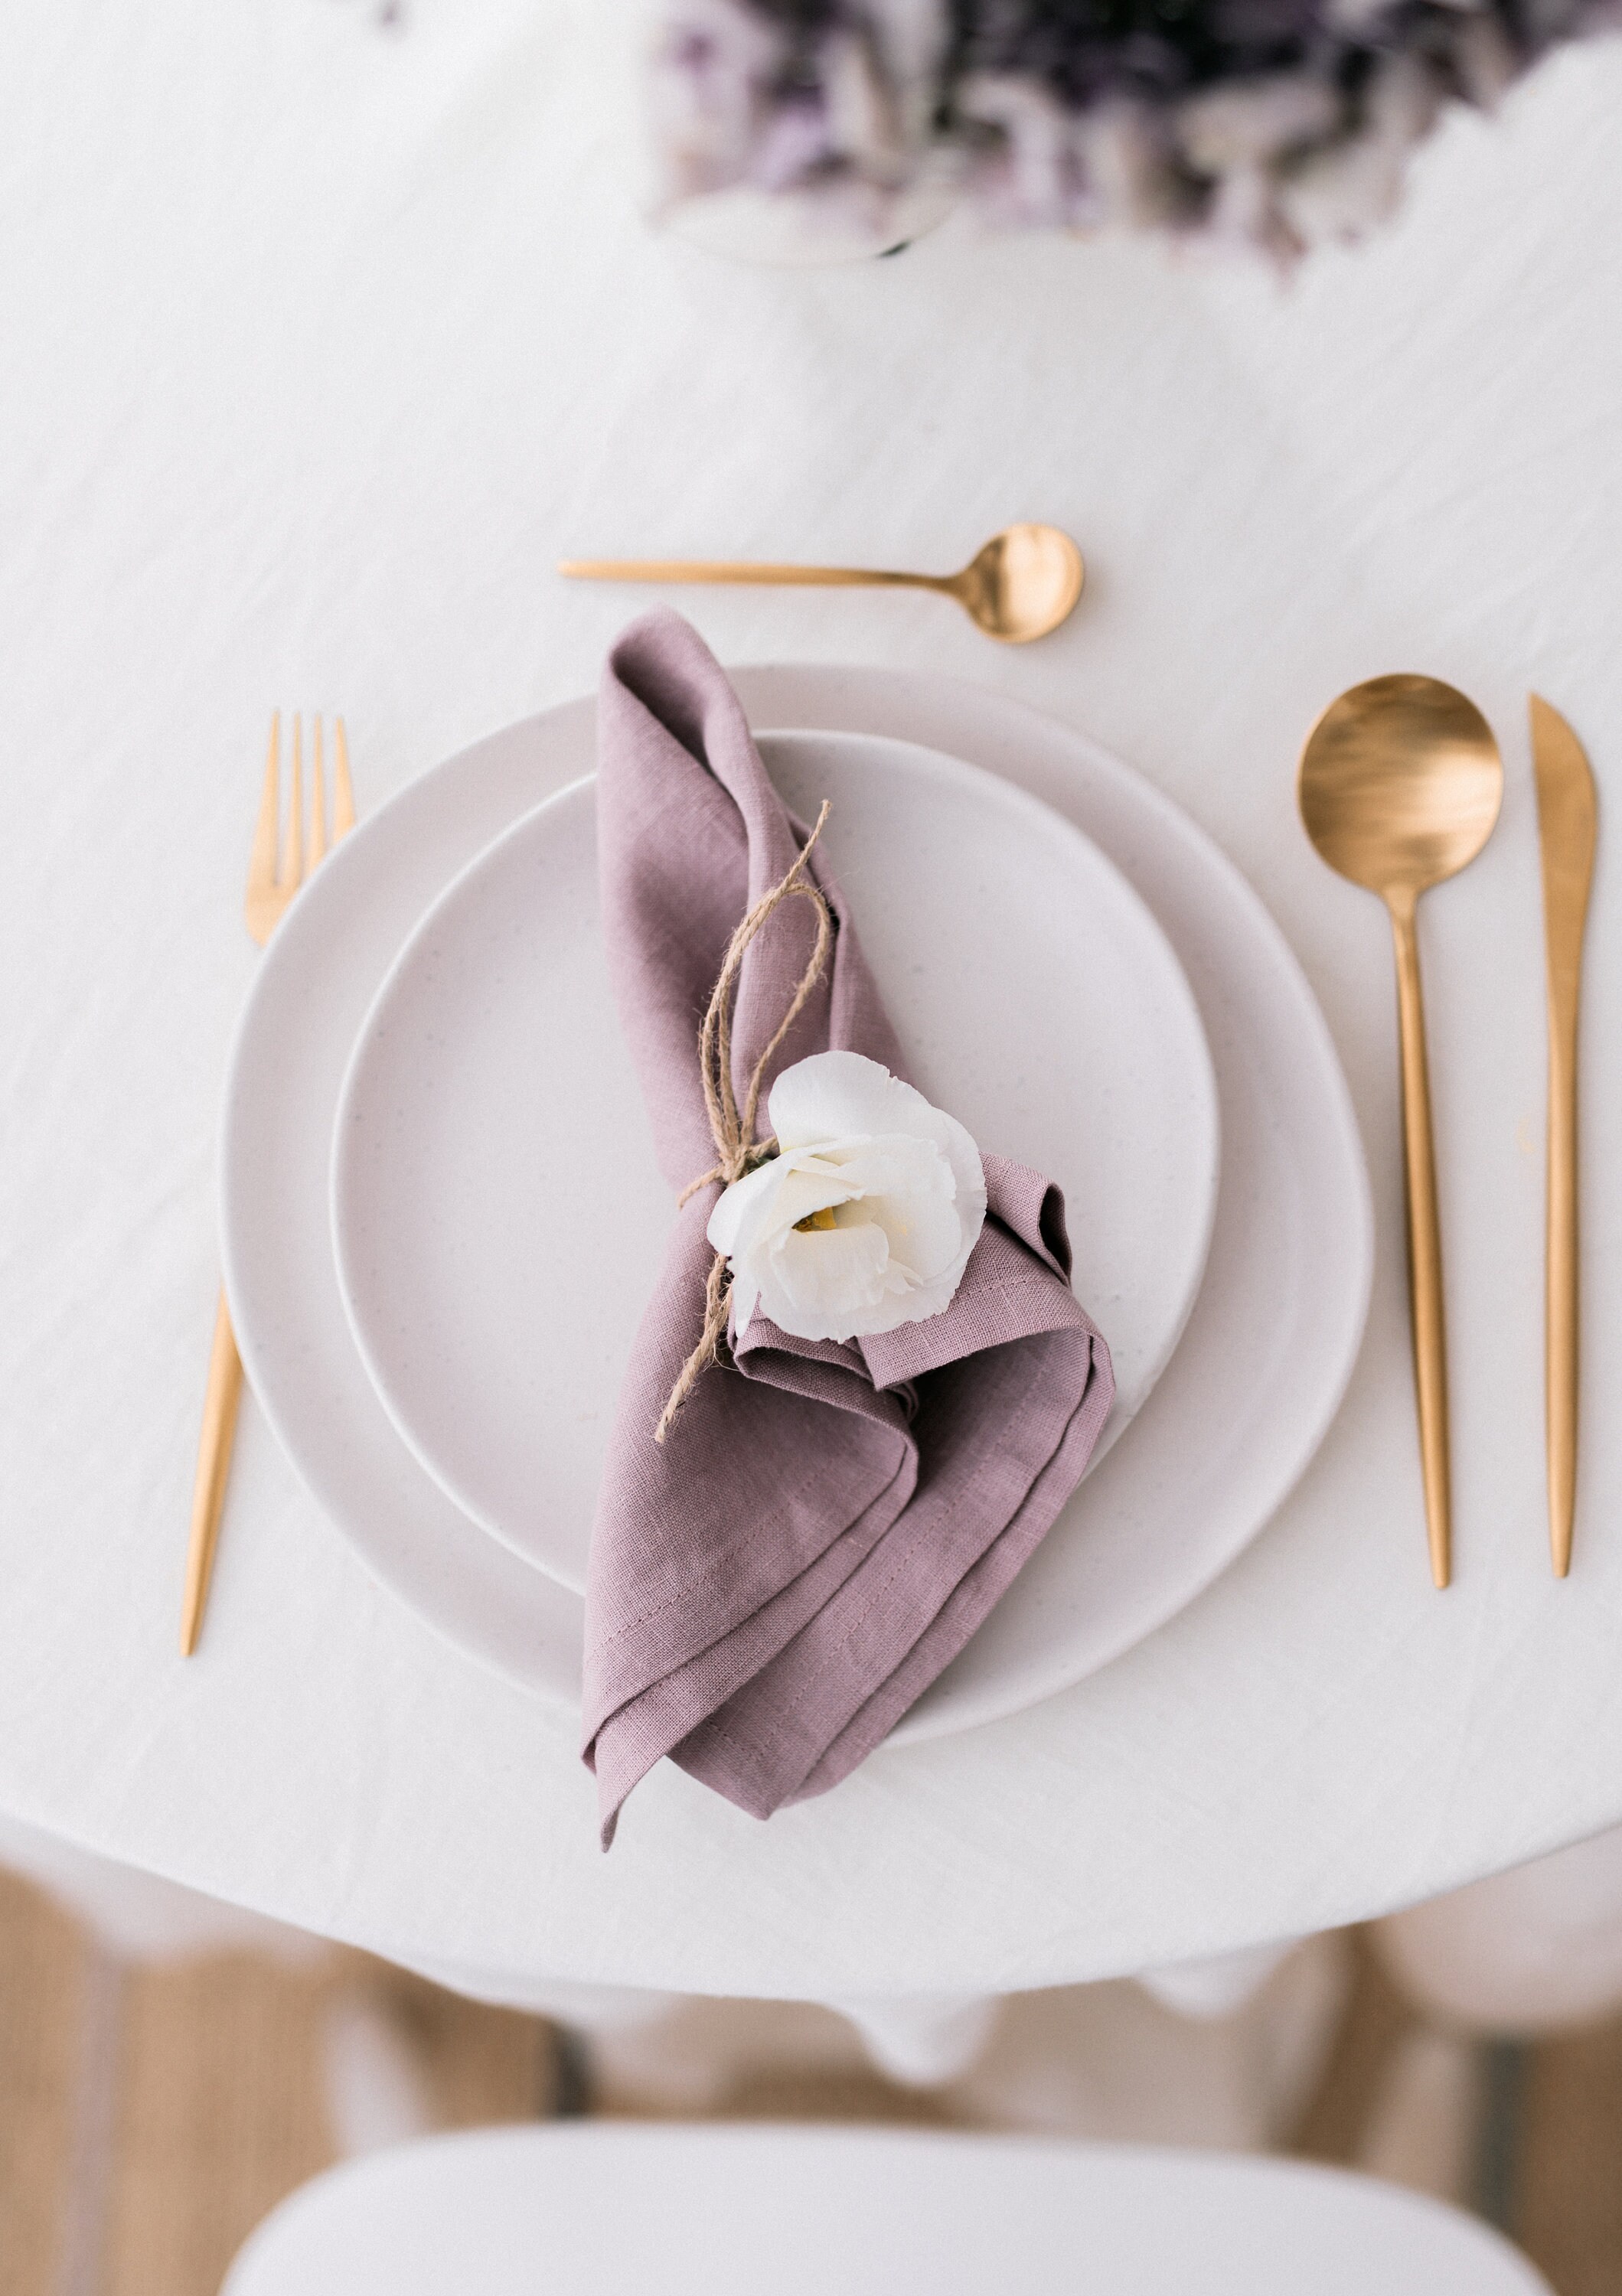 JINVASE Dinner Cloth Napkins Bulk,100% Soft Cotton Linen Napkins,Washable Napkins for Wedding Decorations,Family Event Parties,16”*16”,(Set of 6